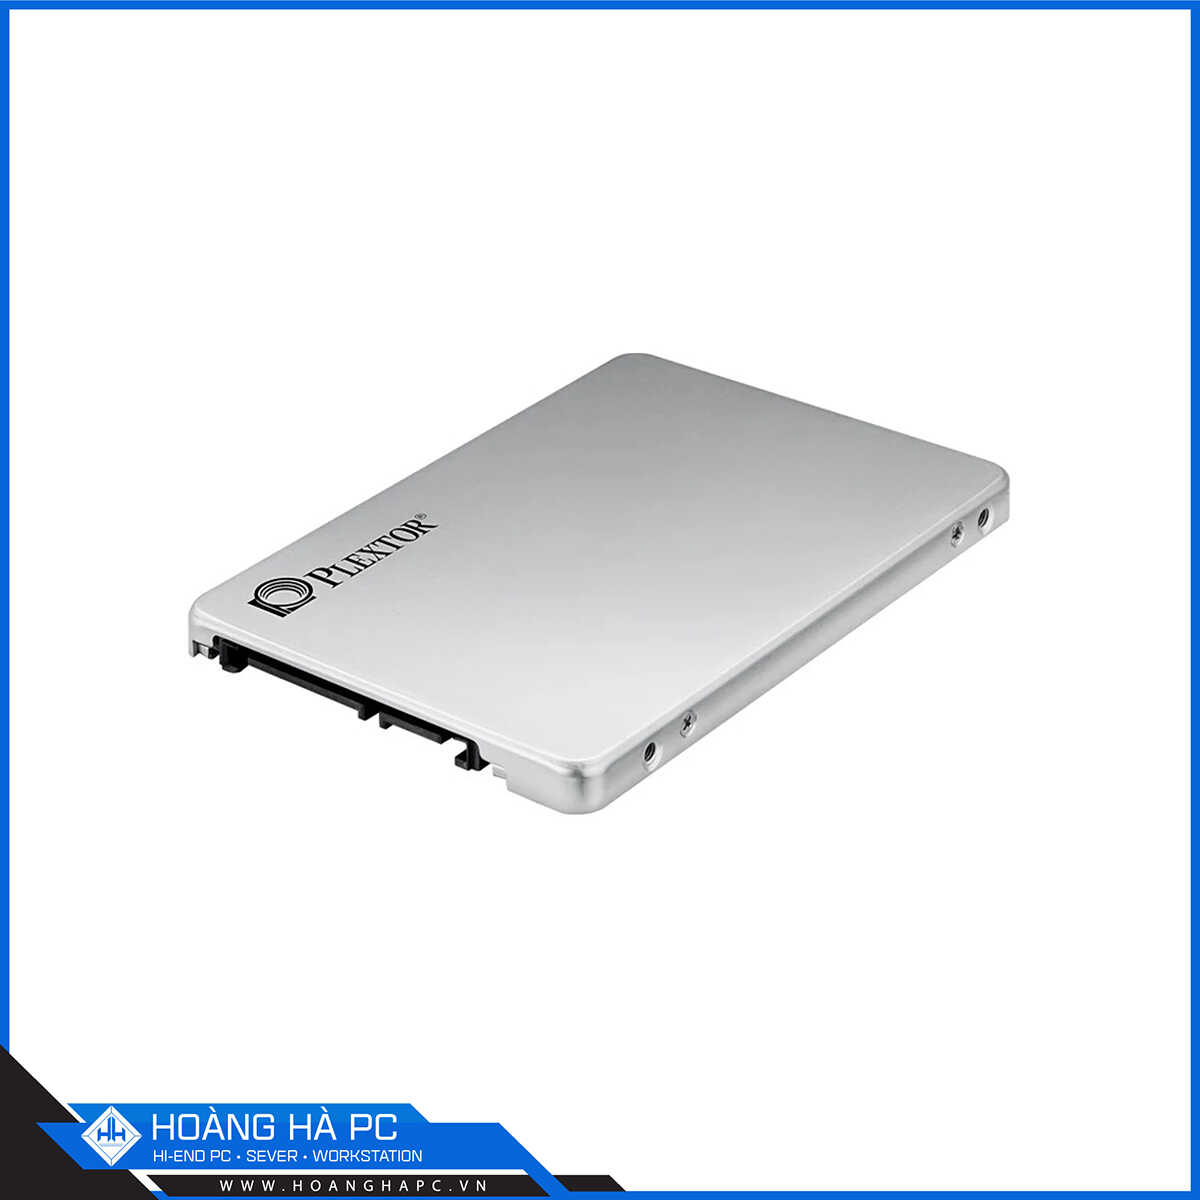 SSD Plextor PX-128S3C Series 128GB